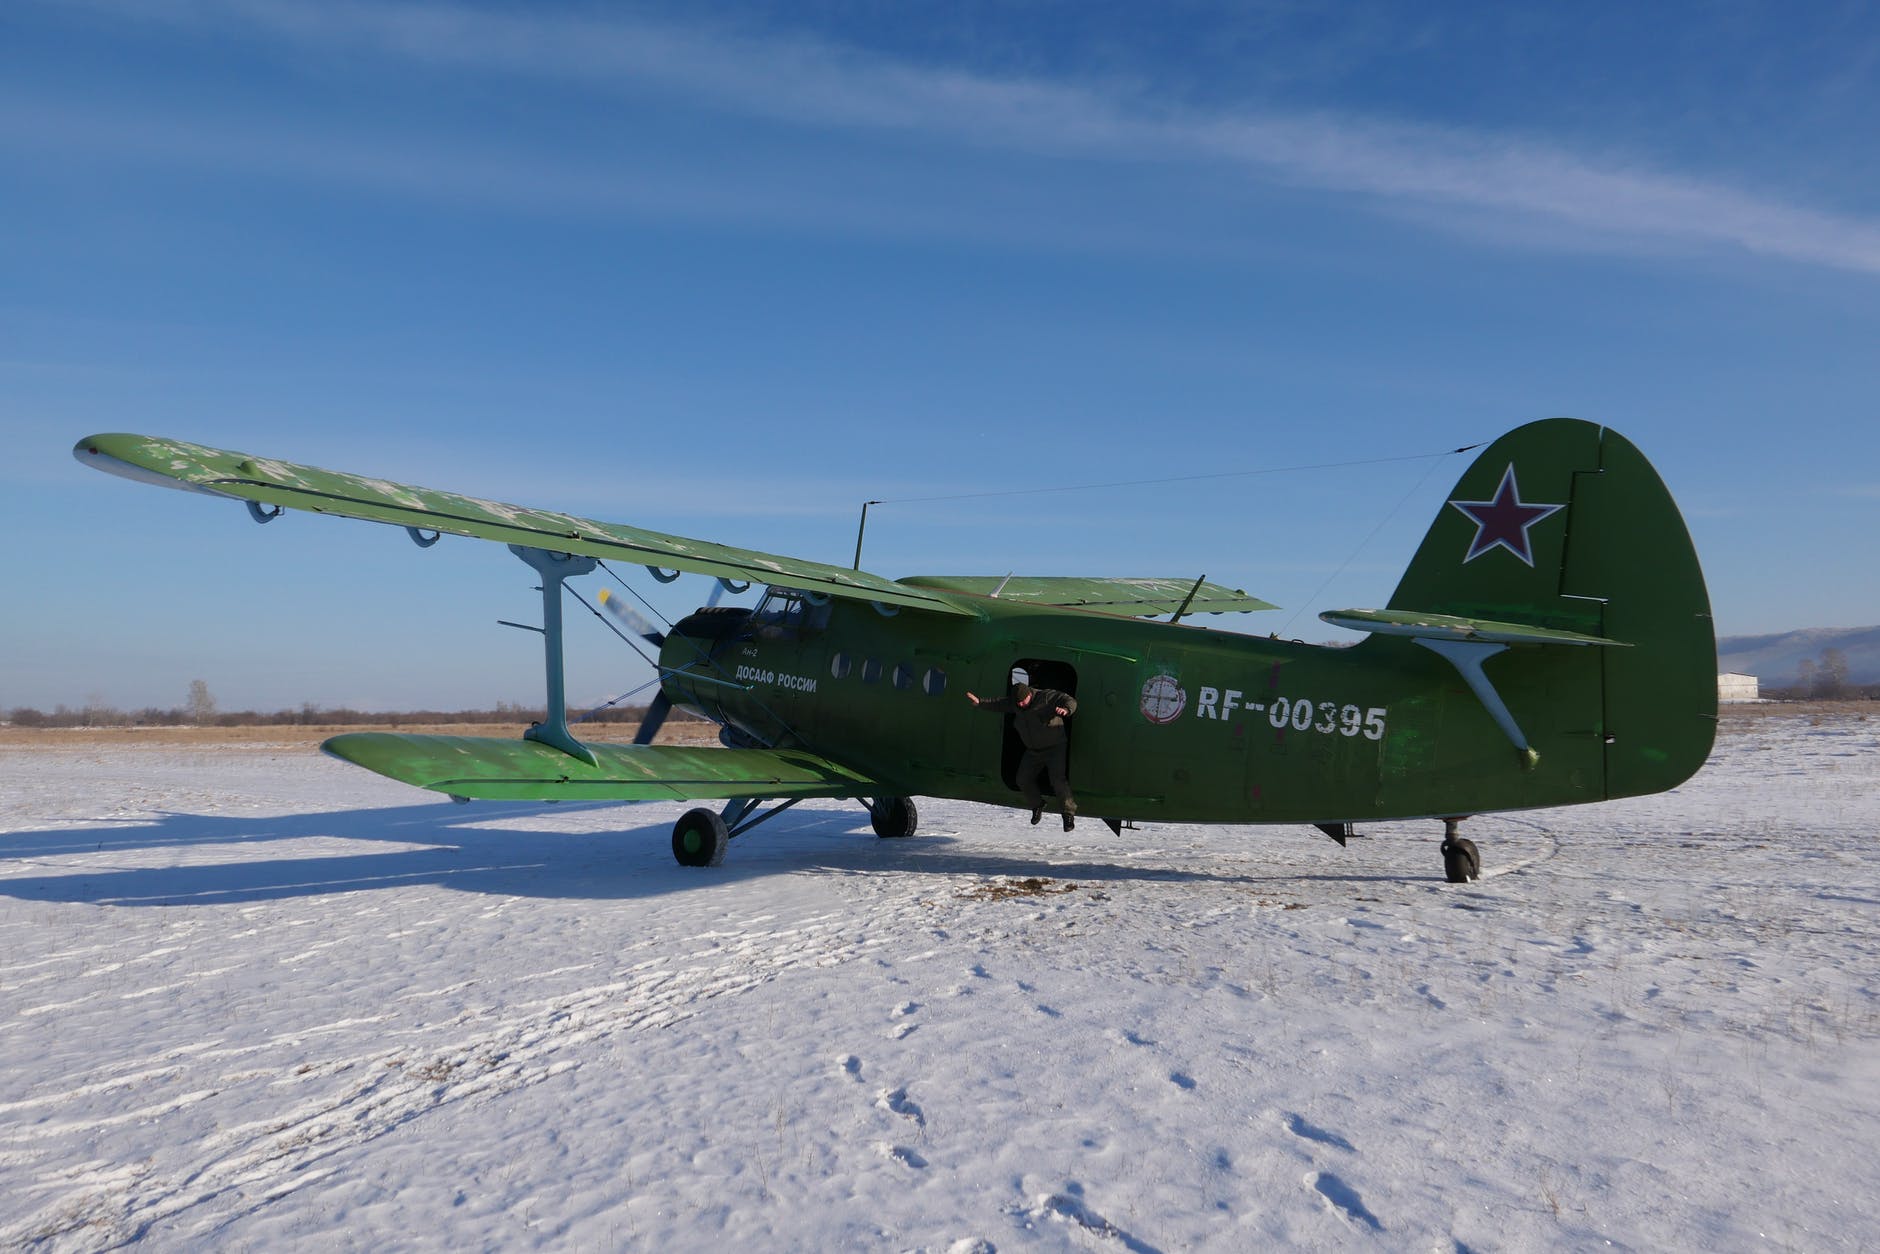 biplane on snowy ground in nature